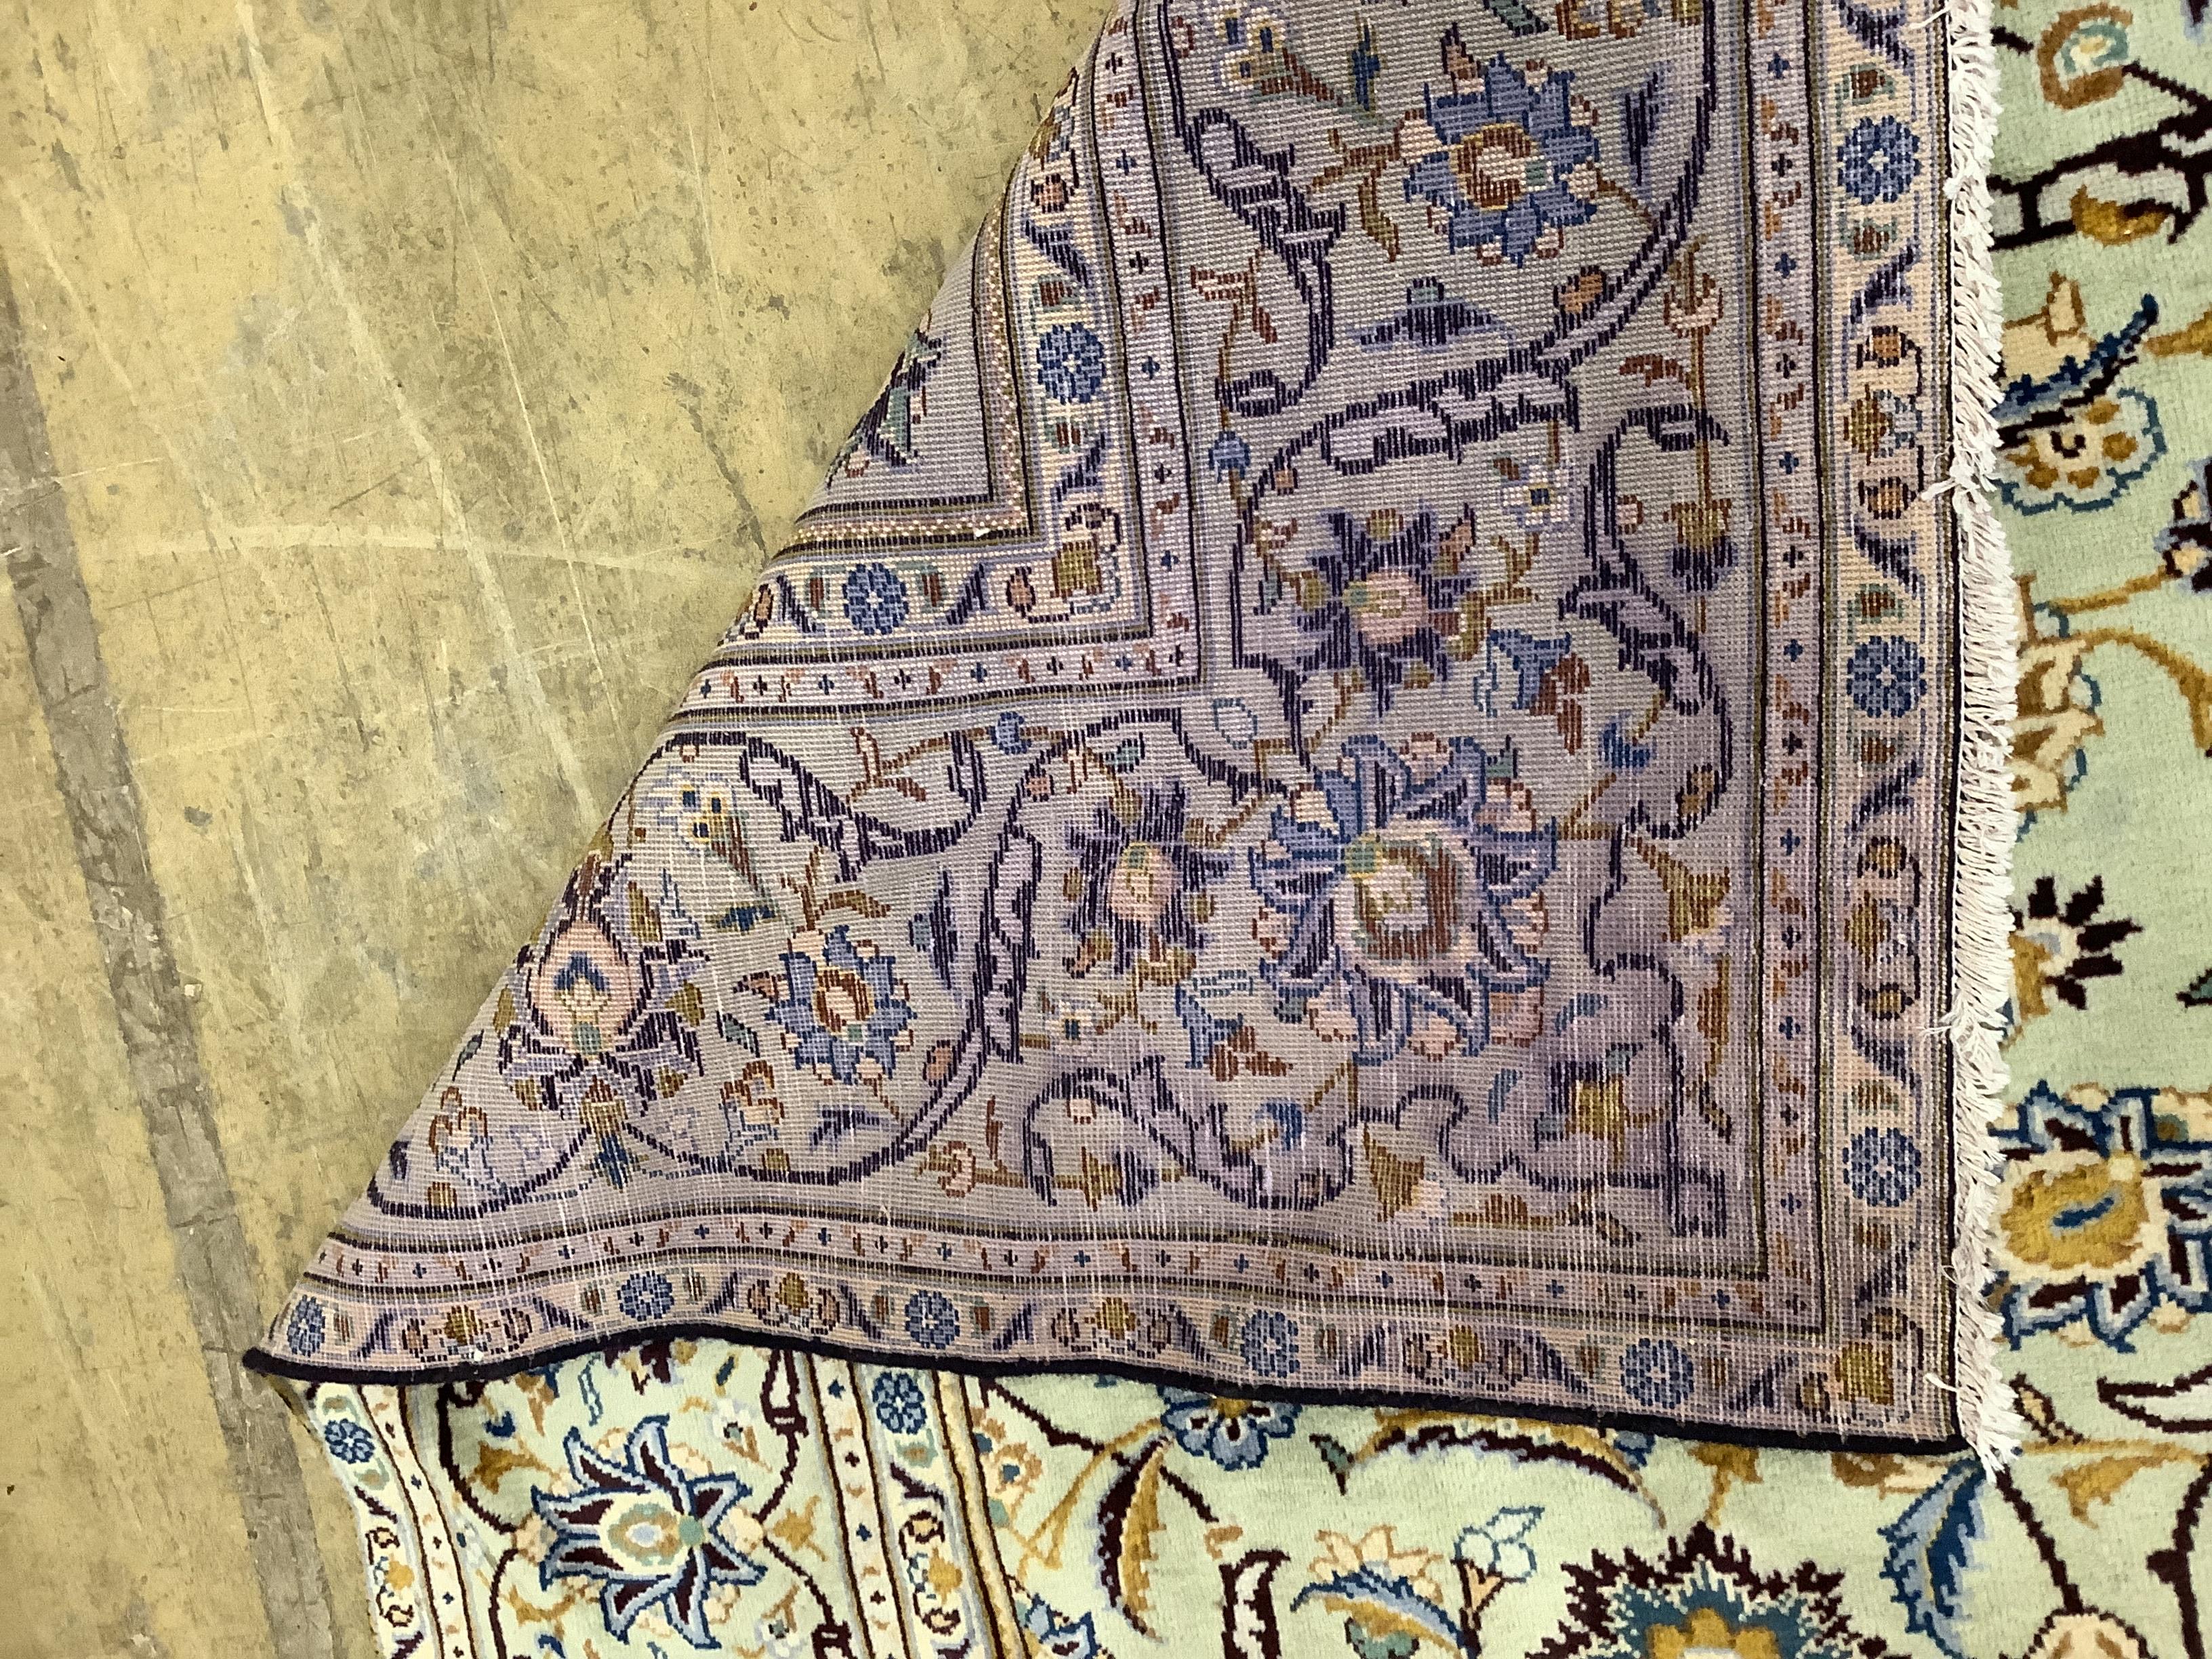 A Kashan pale green ground carpet, 310 x 207cm